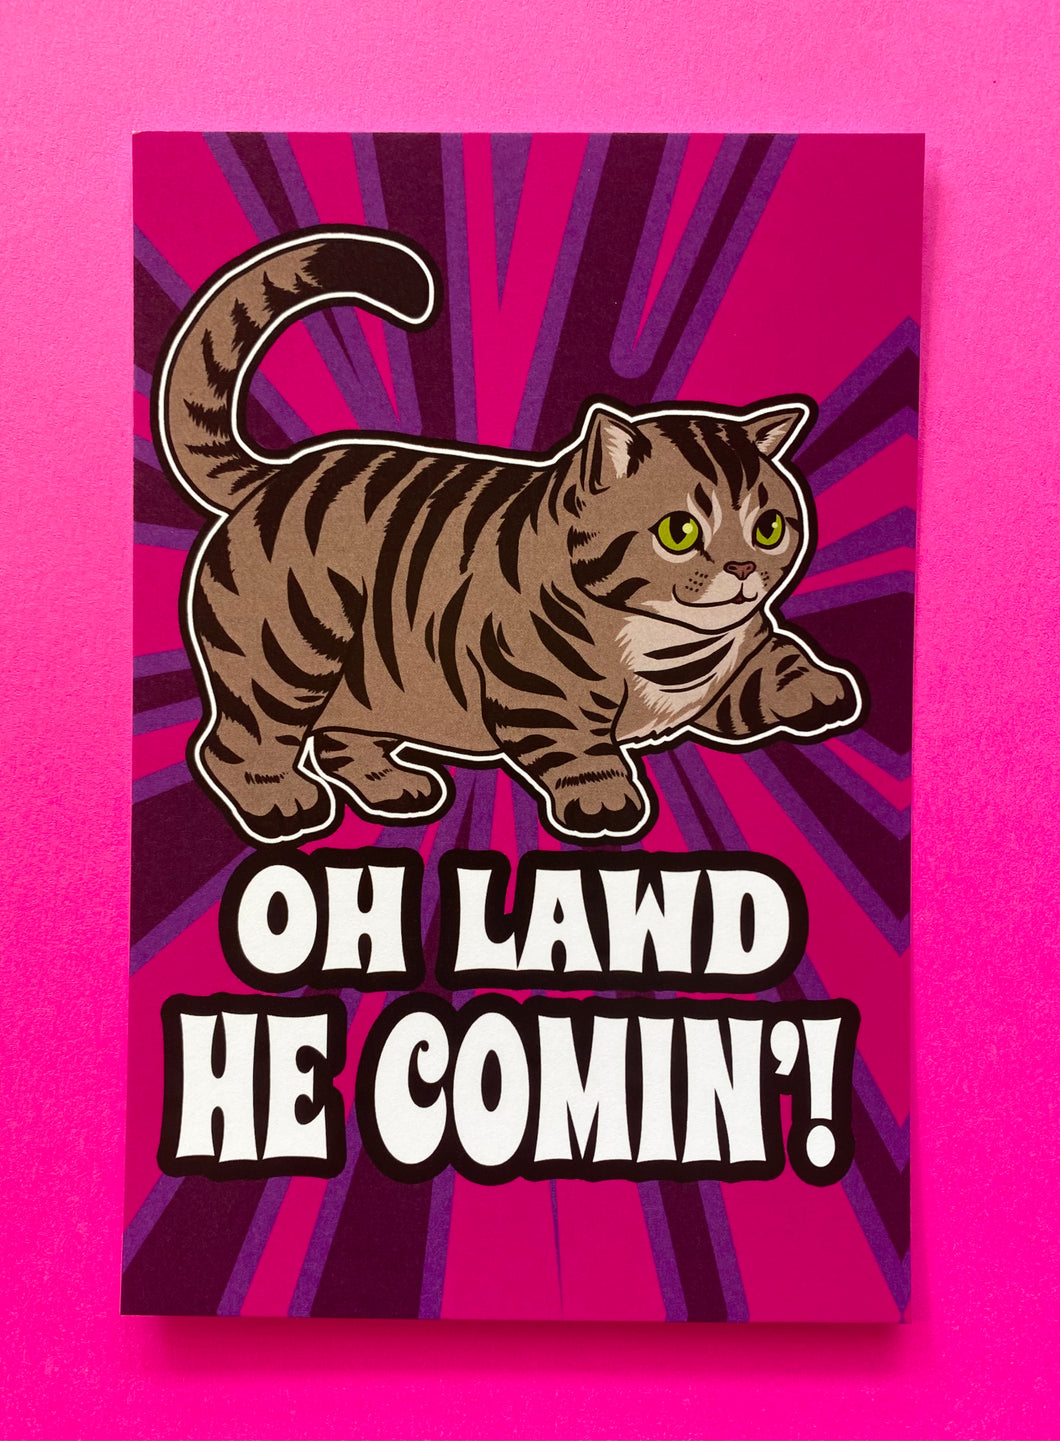 Oh Lawd, HE COMIN’! Chubby Grey Kitty Cat - Mini Art Print Postcard 4 x 6 inches